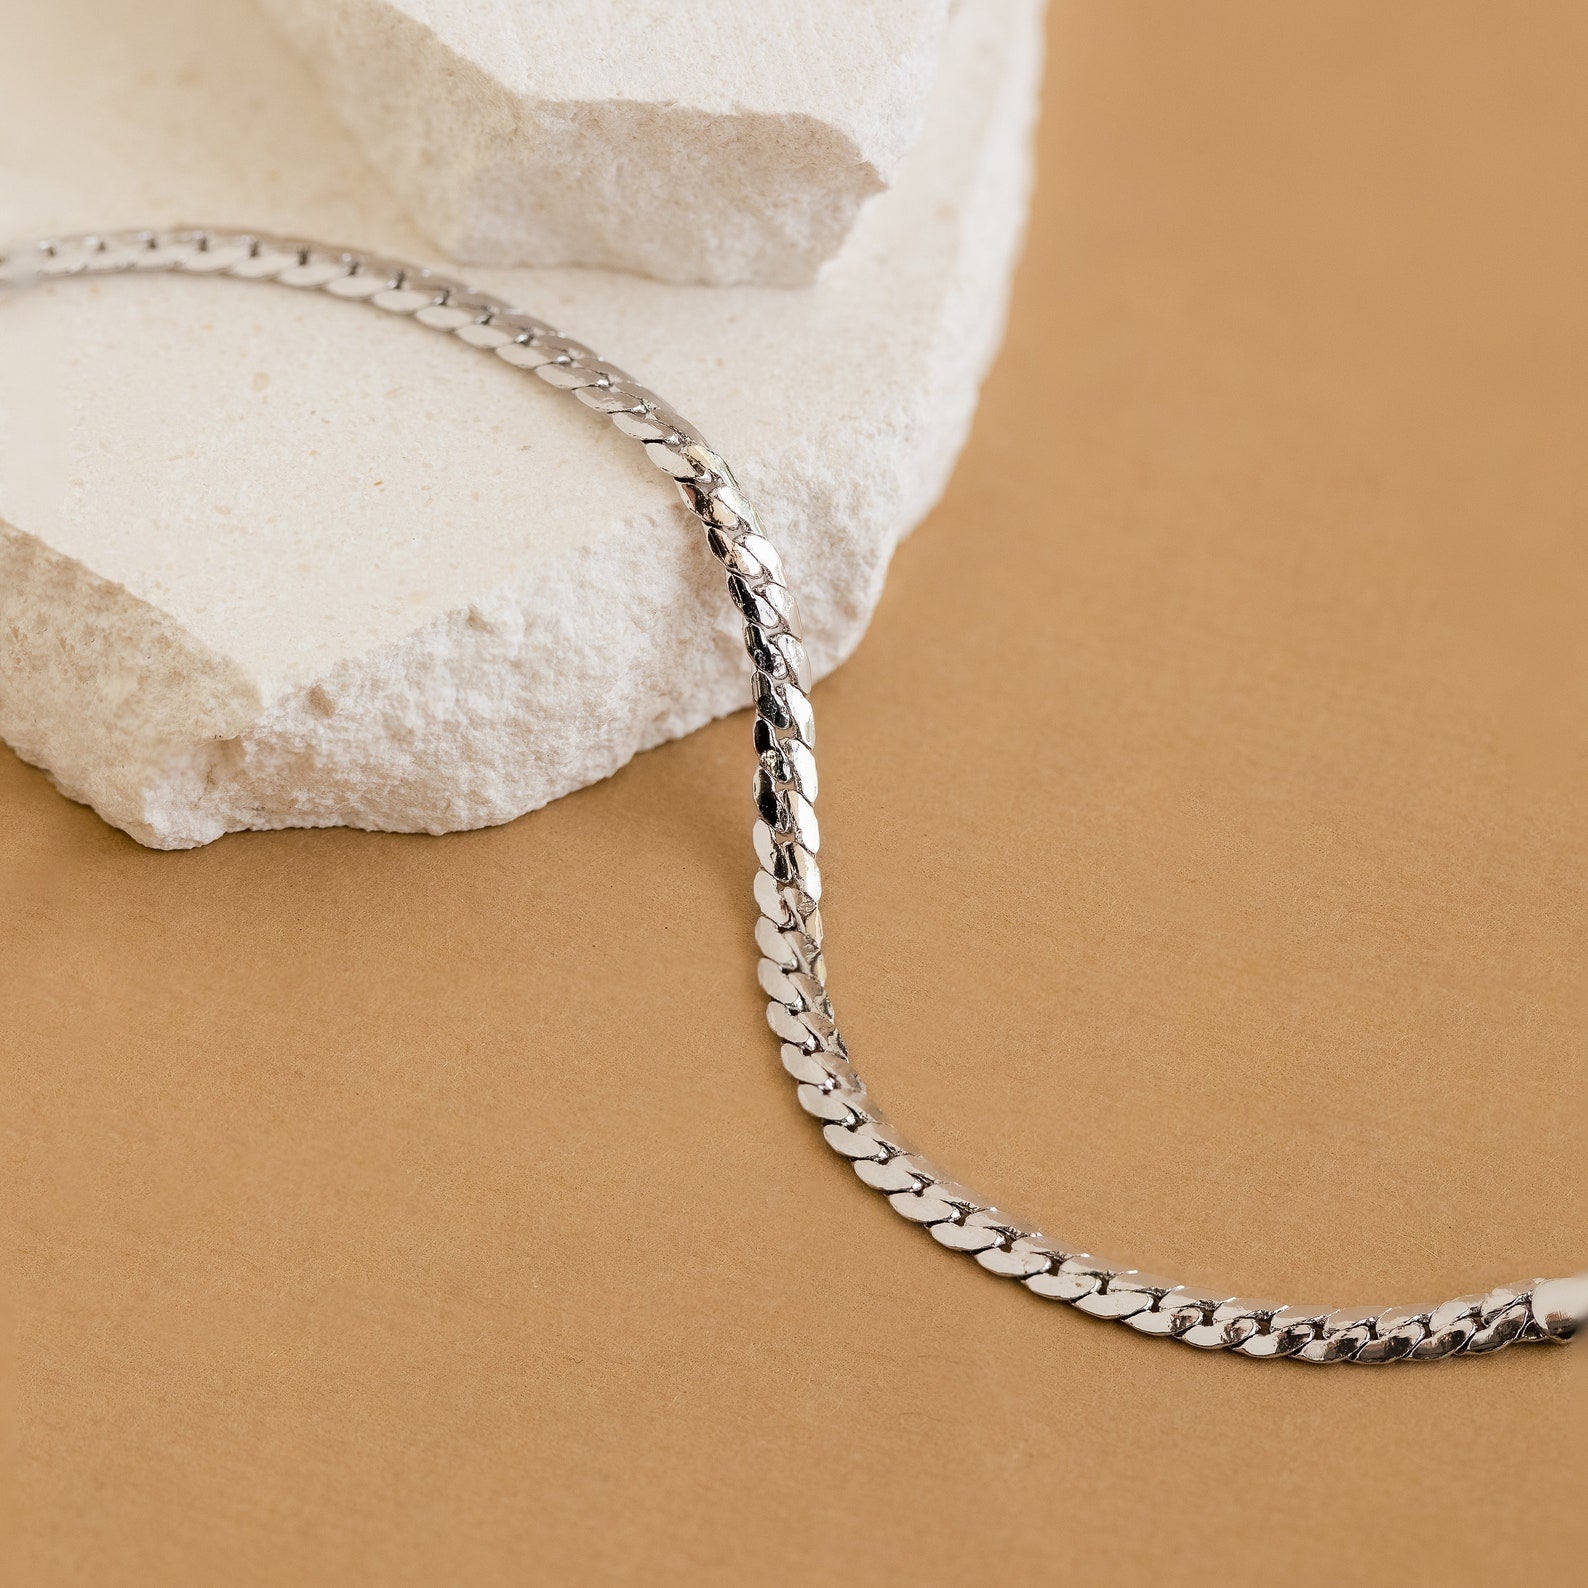 Minimalist Sterling Silver Snake Chain Bracelet